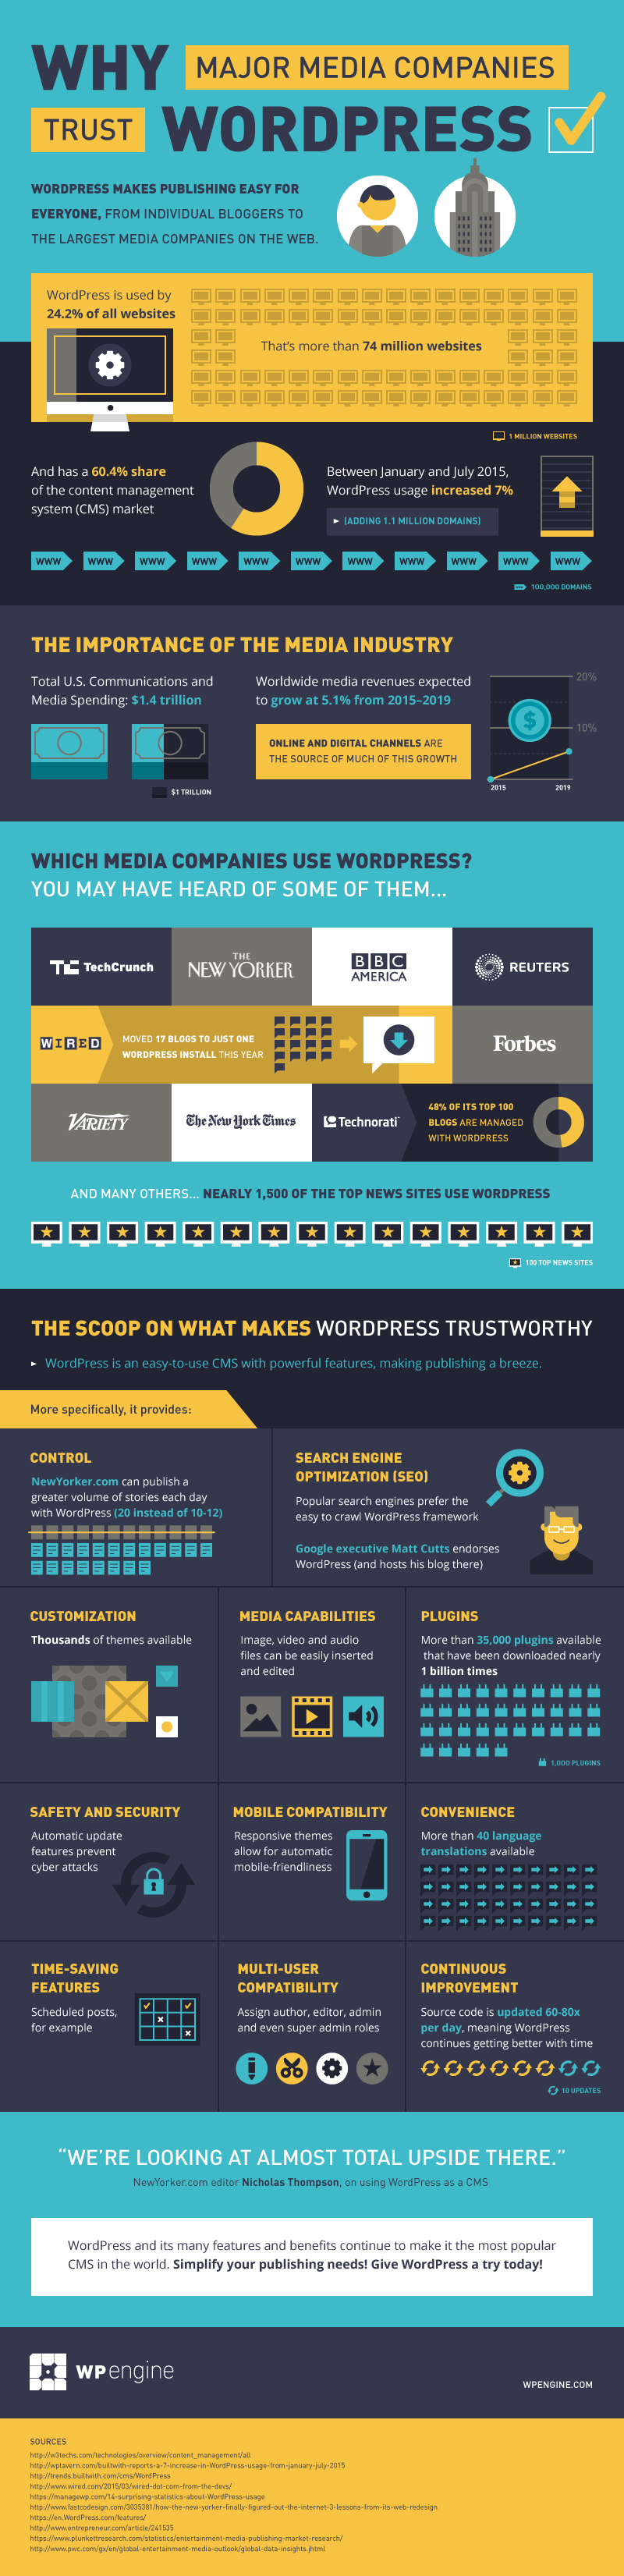 Why Major Media Companies Trust WordPress - Infographic